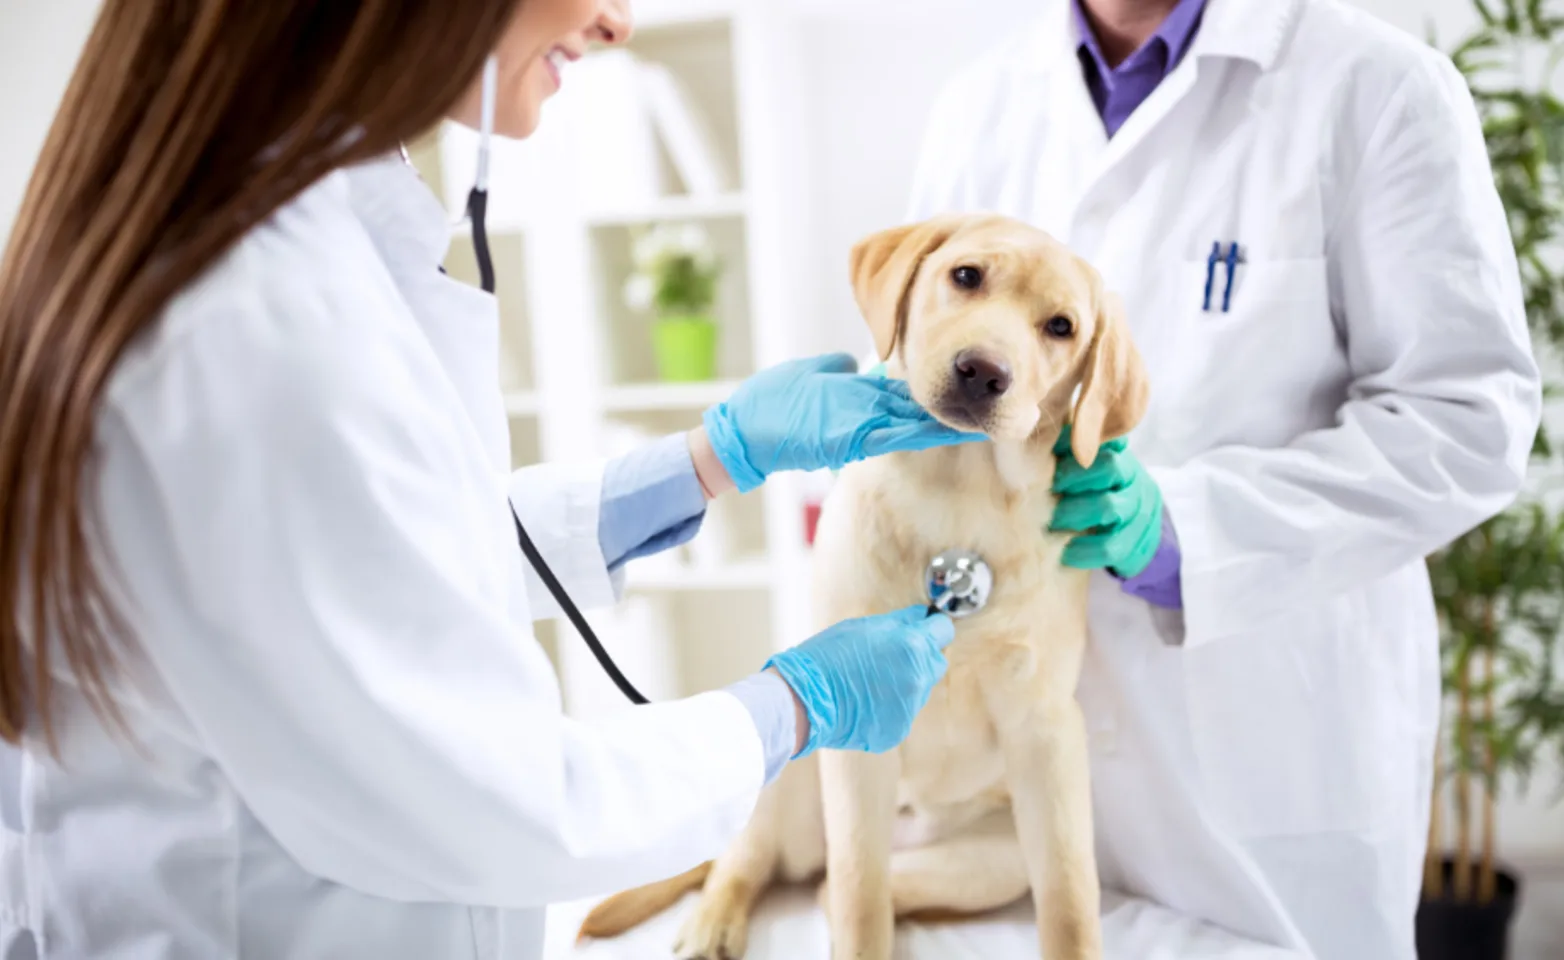 Two Veterinarians Examining a Dog